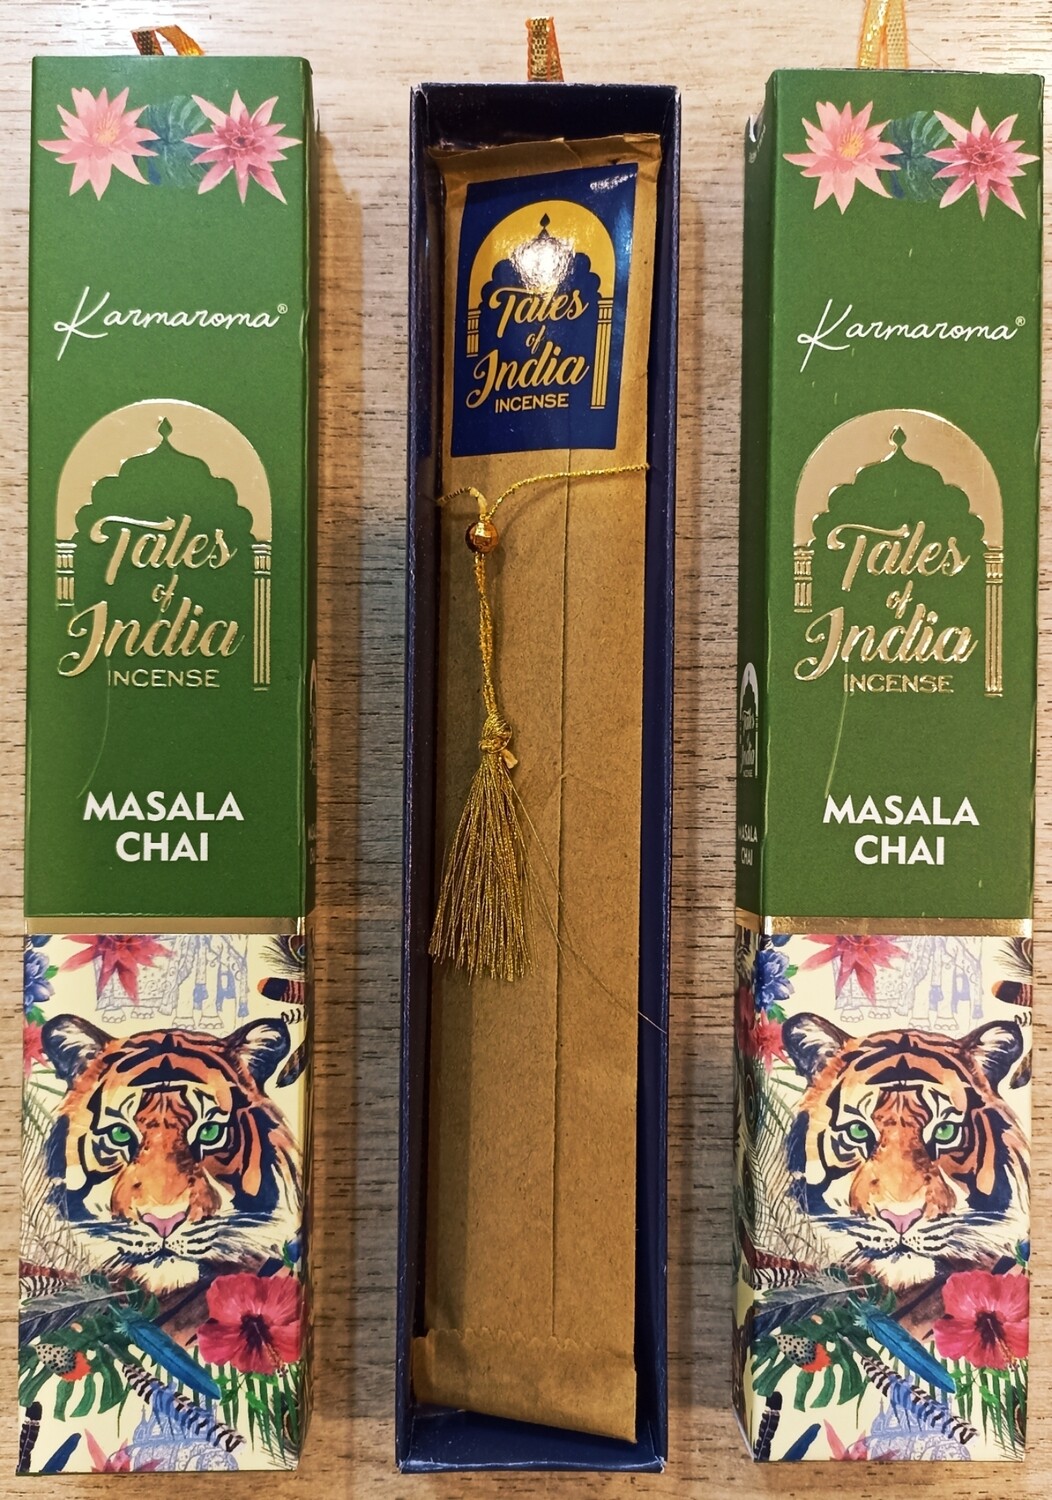 MASALA TALES OF INDIA MASALA CHAI